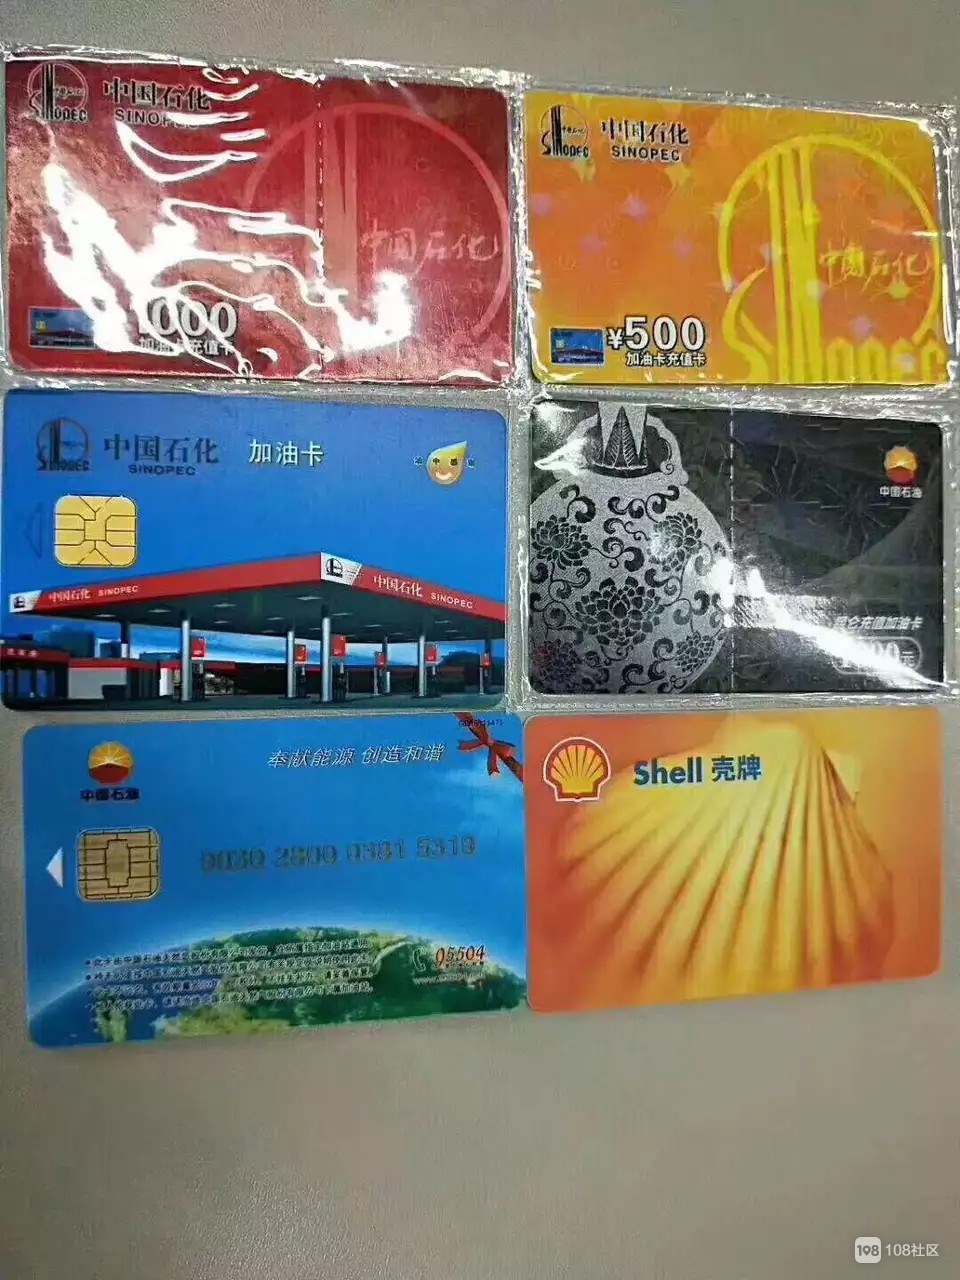 OB欧宝:
中国石油销售分公司免费赠送加油卡实物短信中还有一个错别字